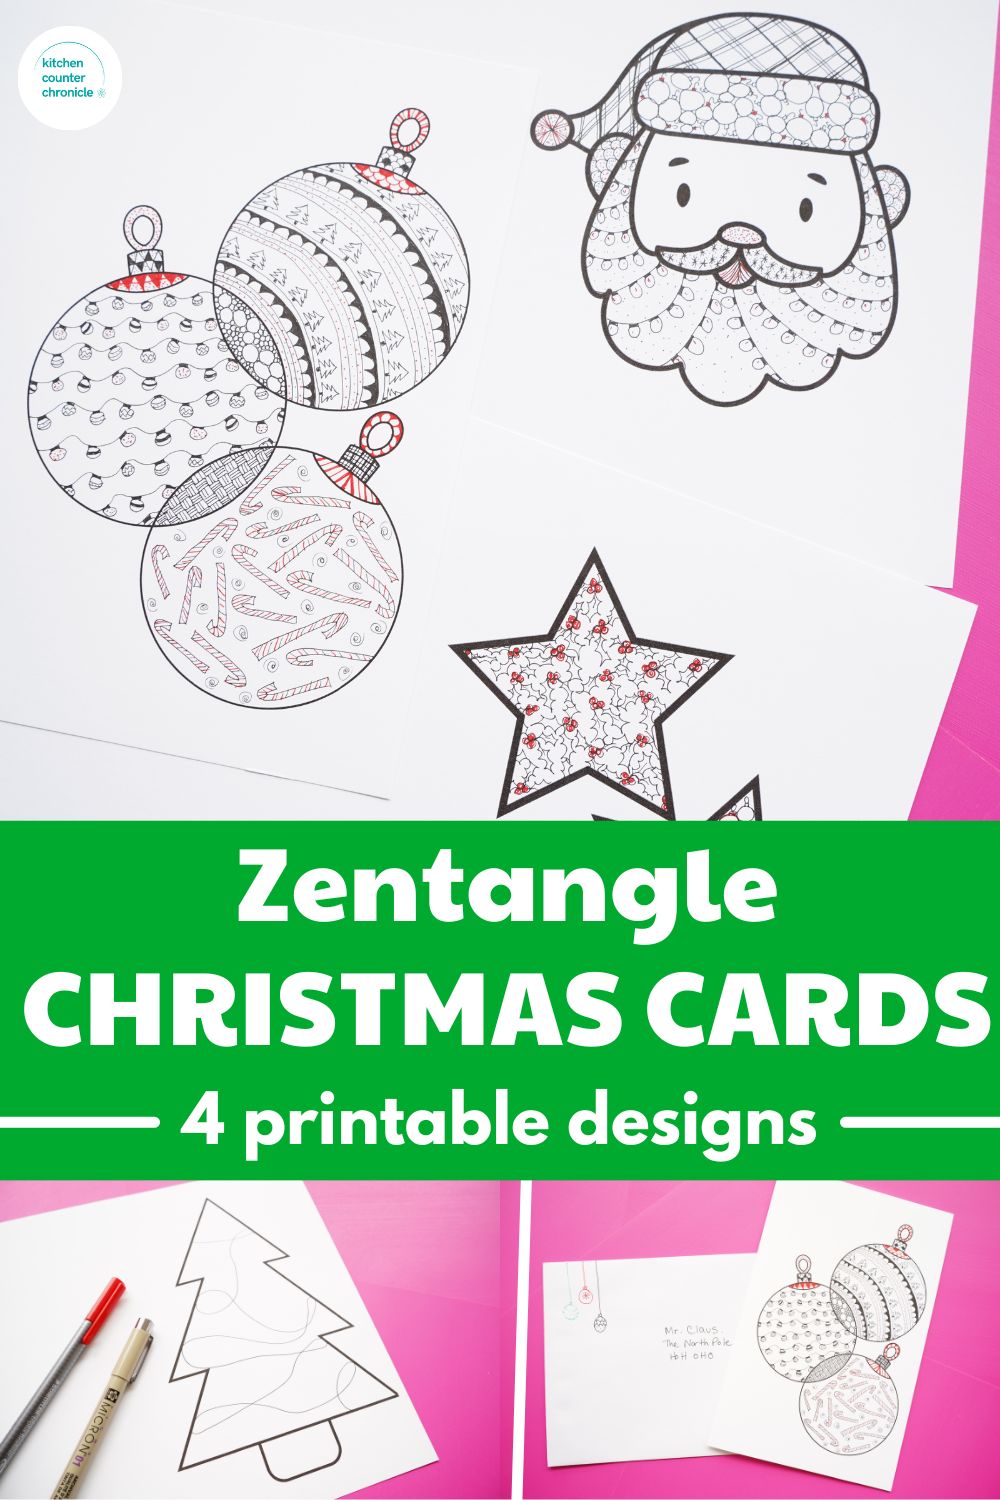 4 printable zentangle Christmas cards with christmas zentangle patterns